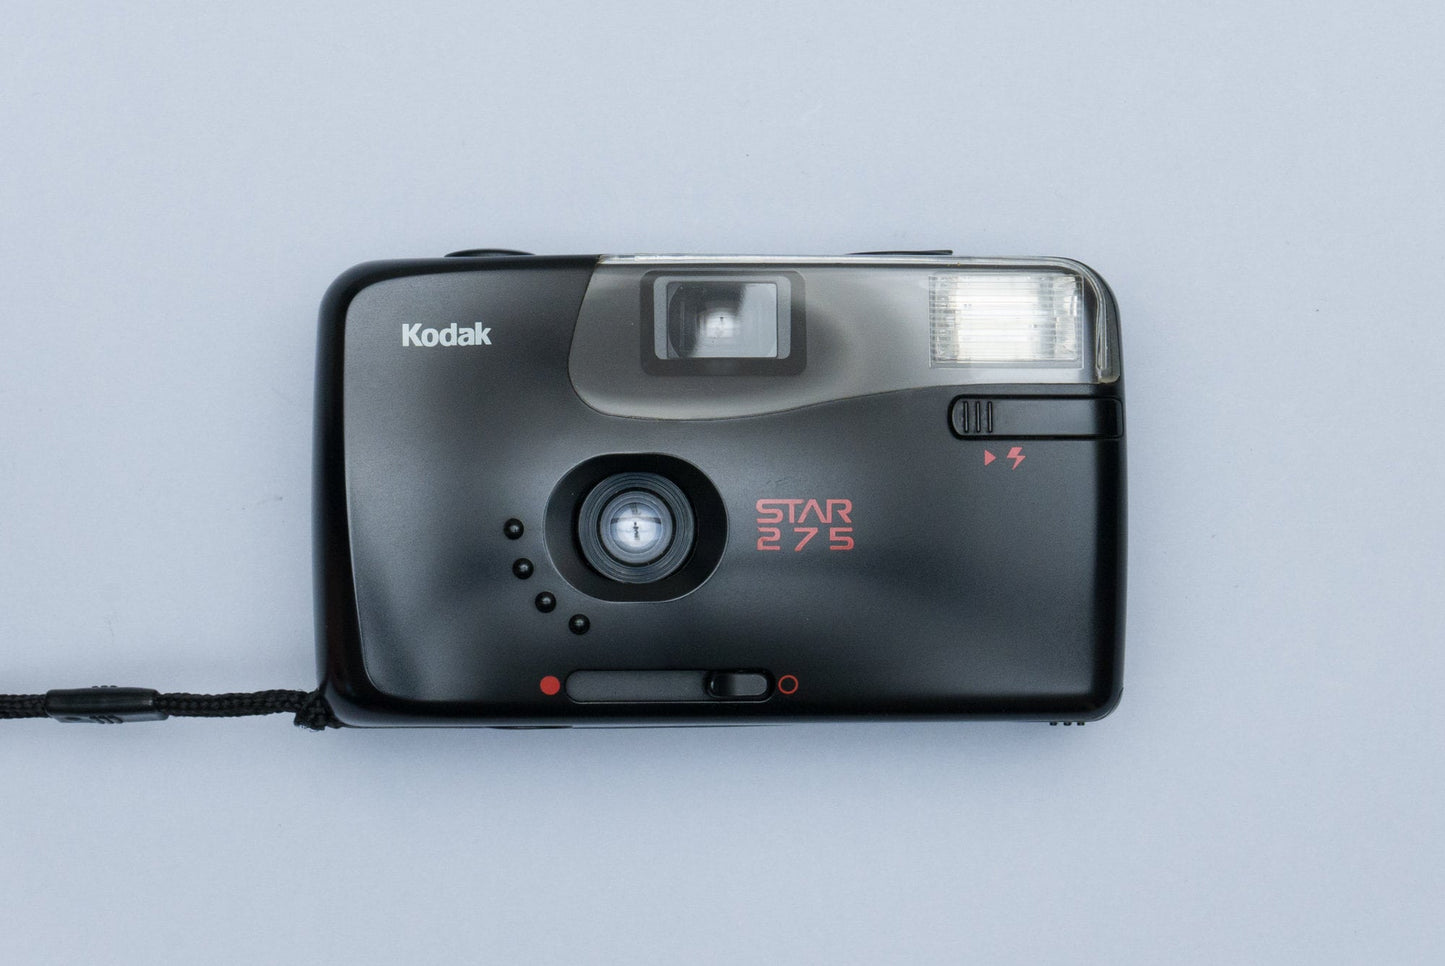 Kodak STAR 275 35mm Compact Point and Shoot Film Camera